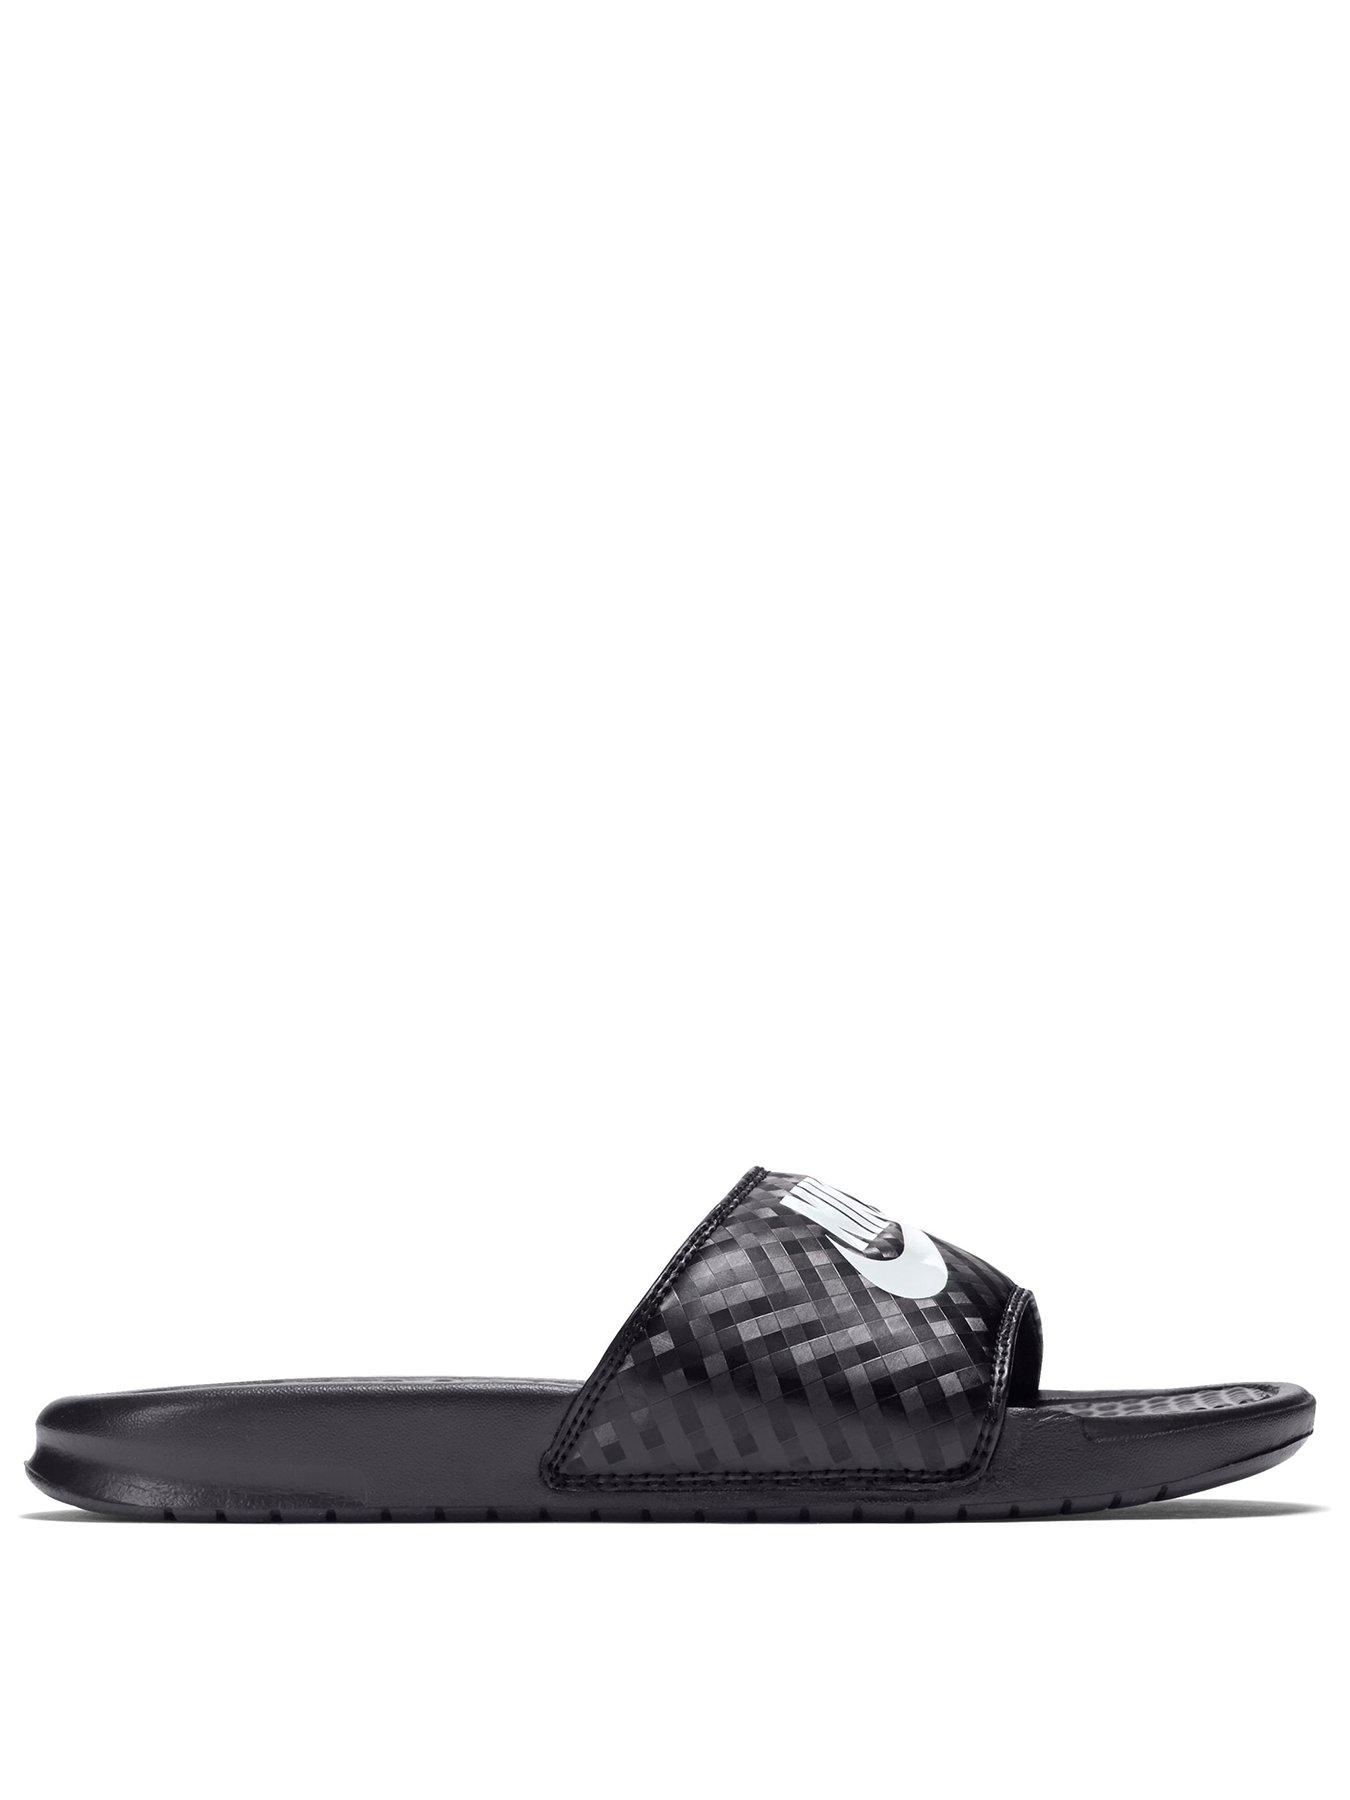 Nike | Sandals \u0026 flip flops | Shoes 